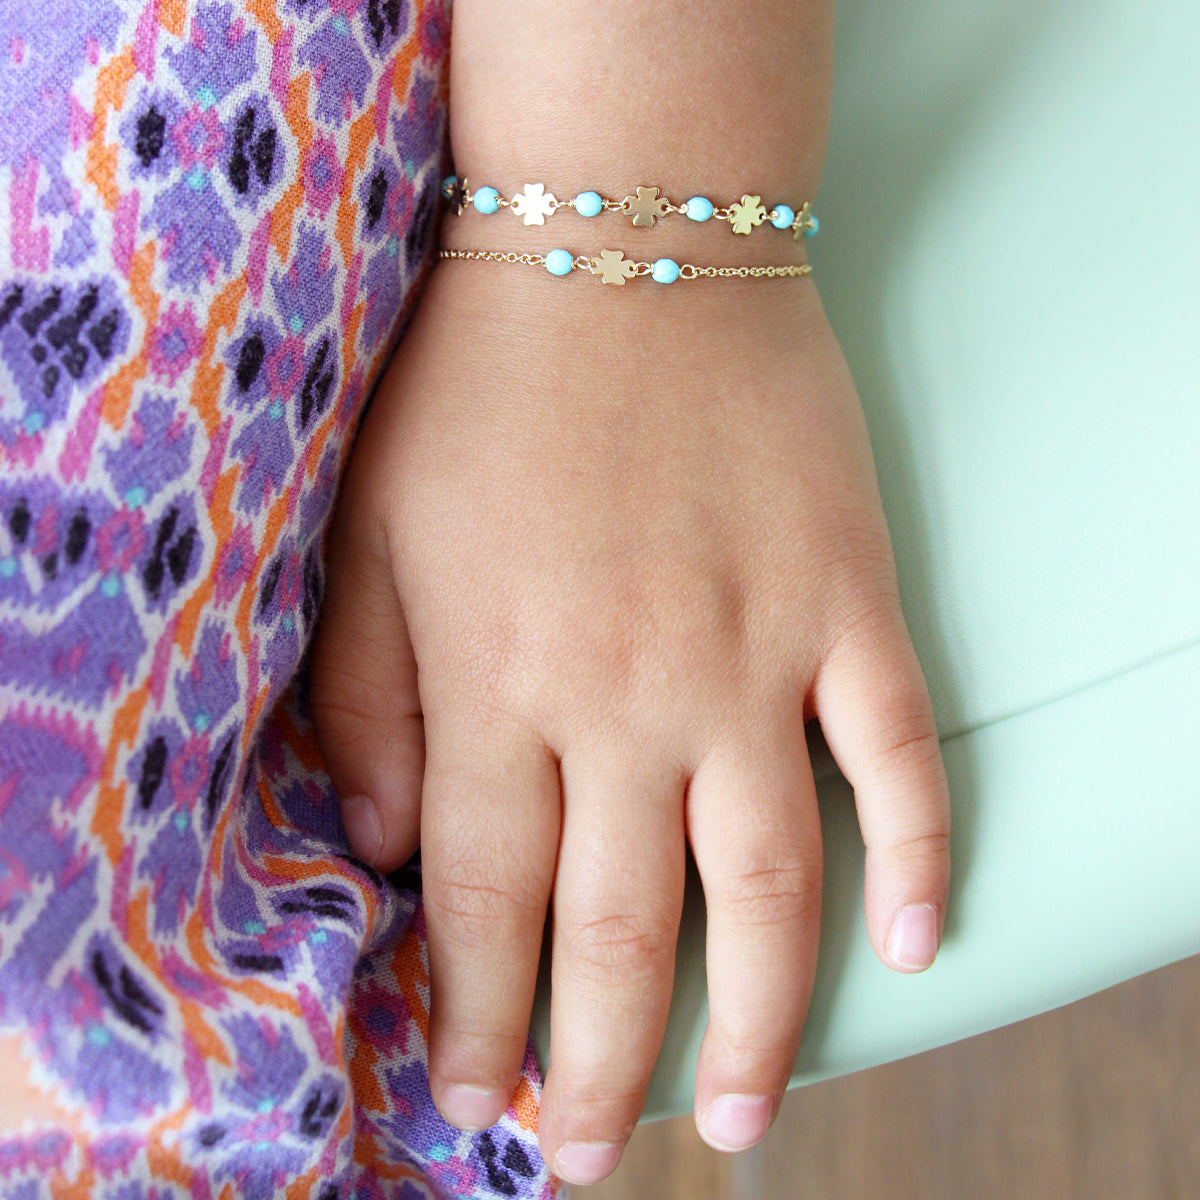 Four-leaf clover chain bracelet Turquoise stones Child - Io&Ro